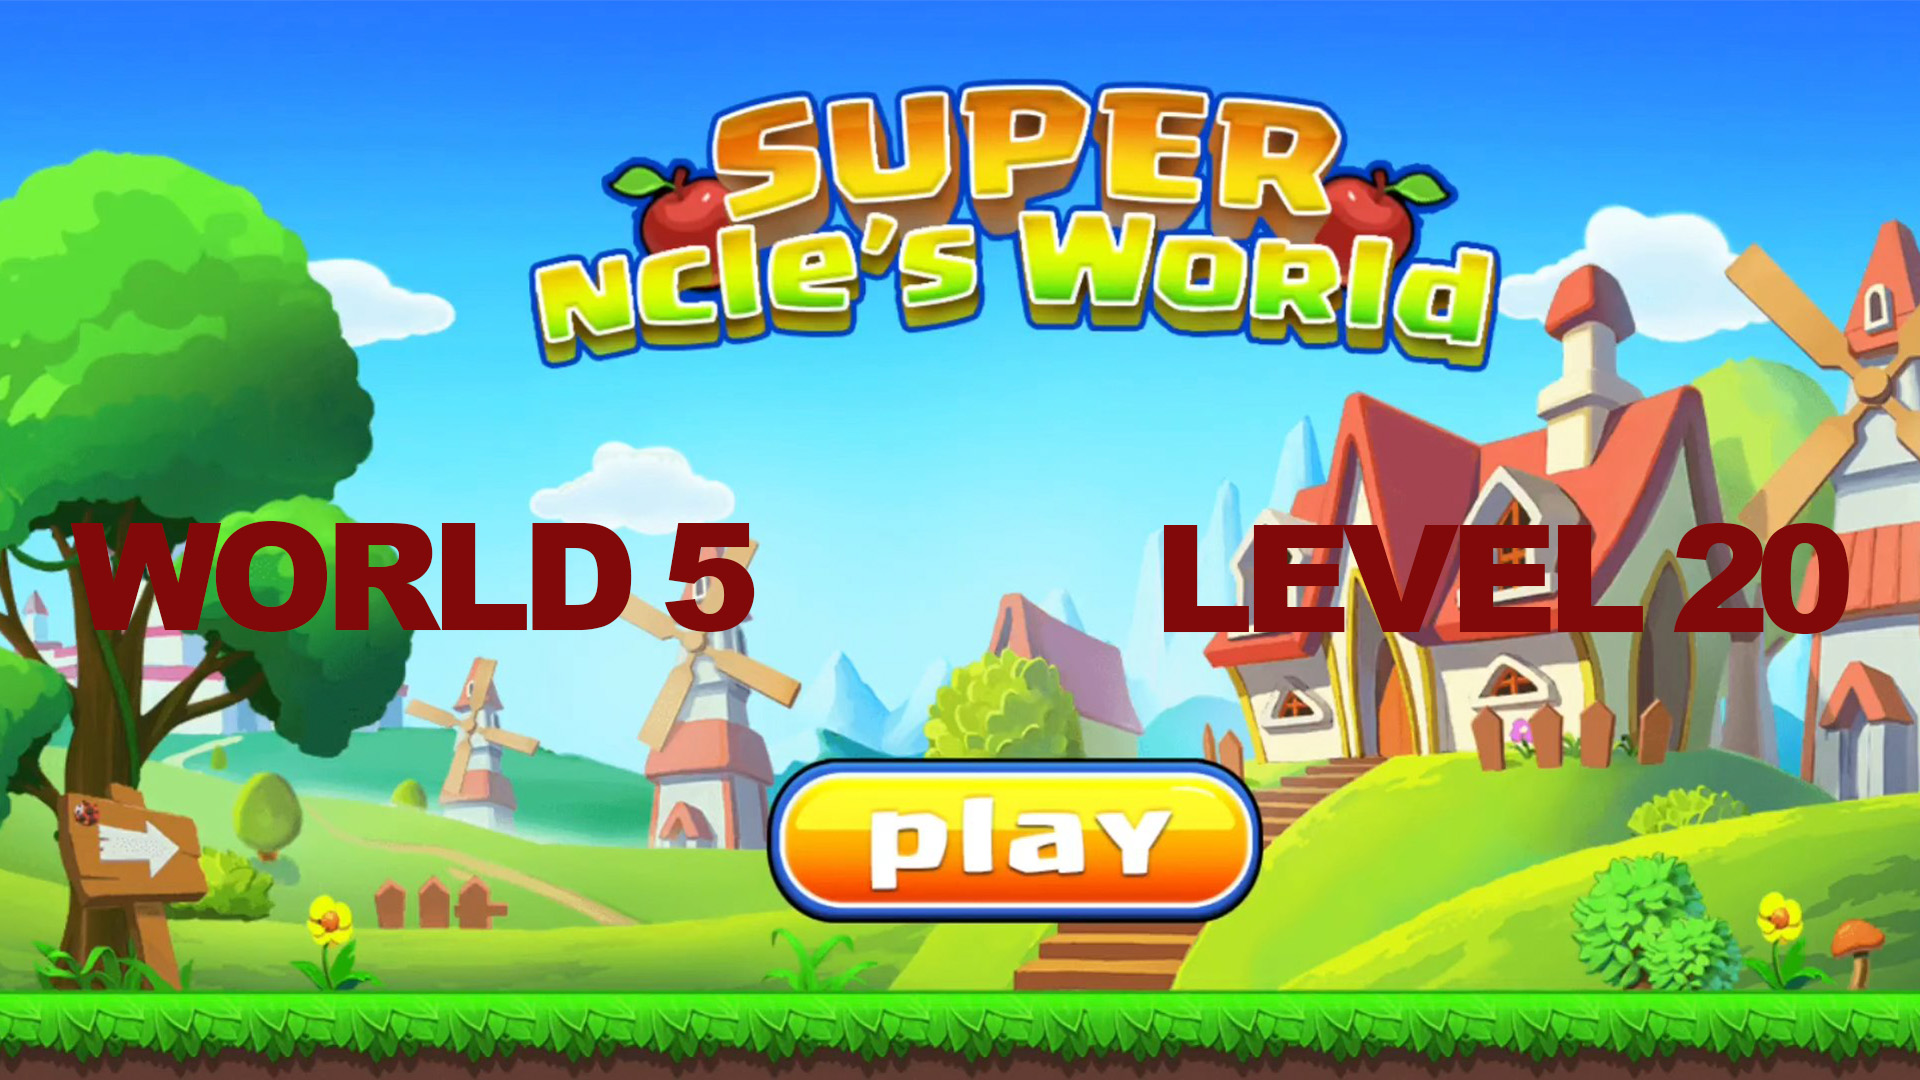 Super ncle's  World 5. Level 20.